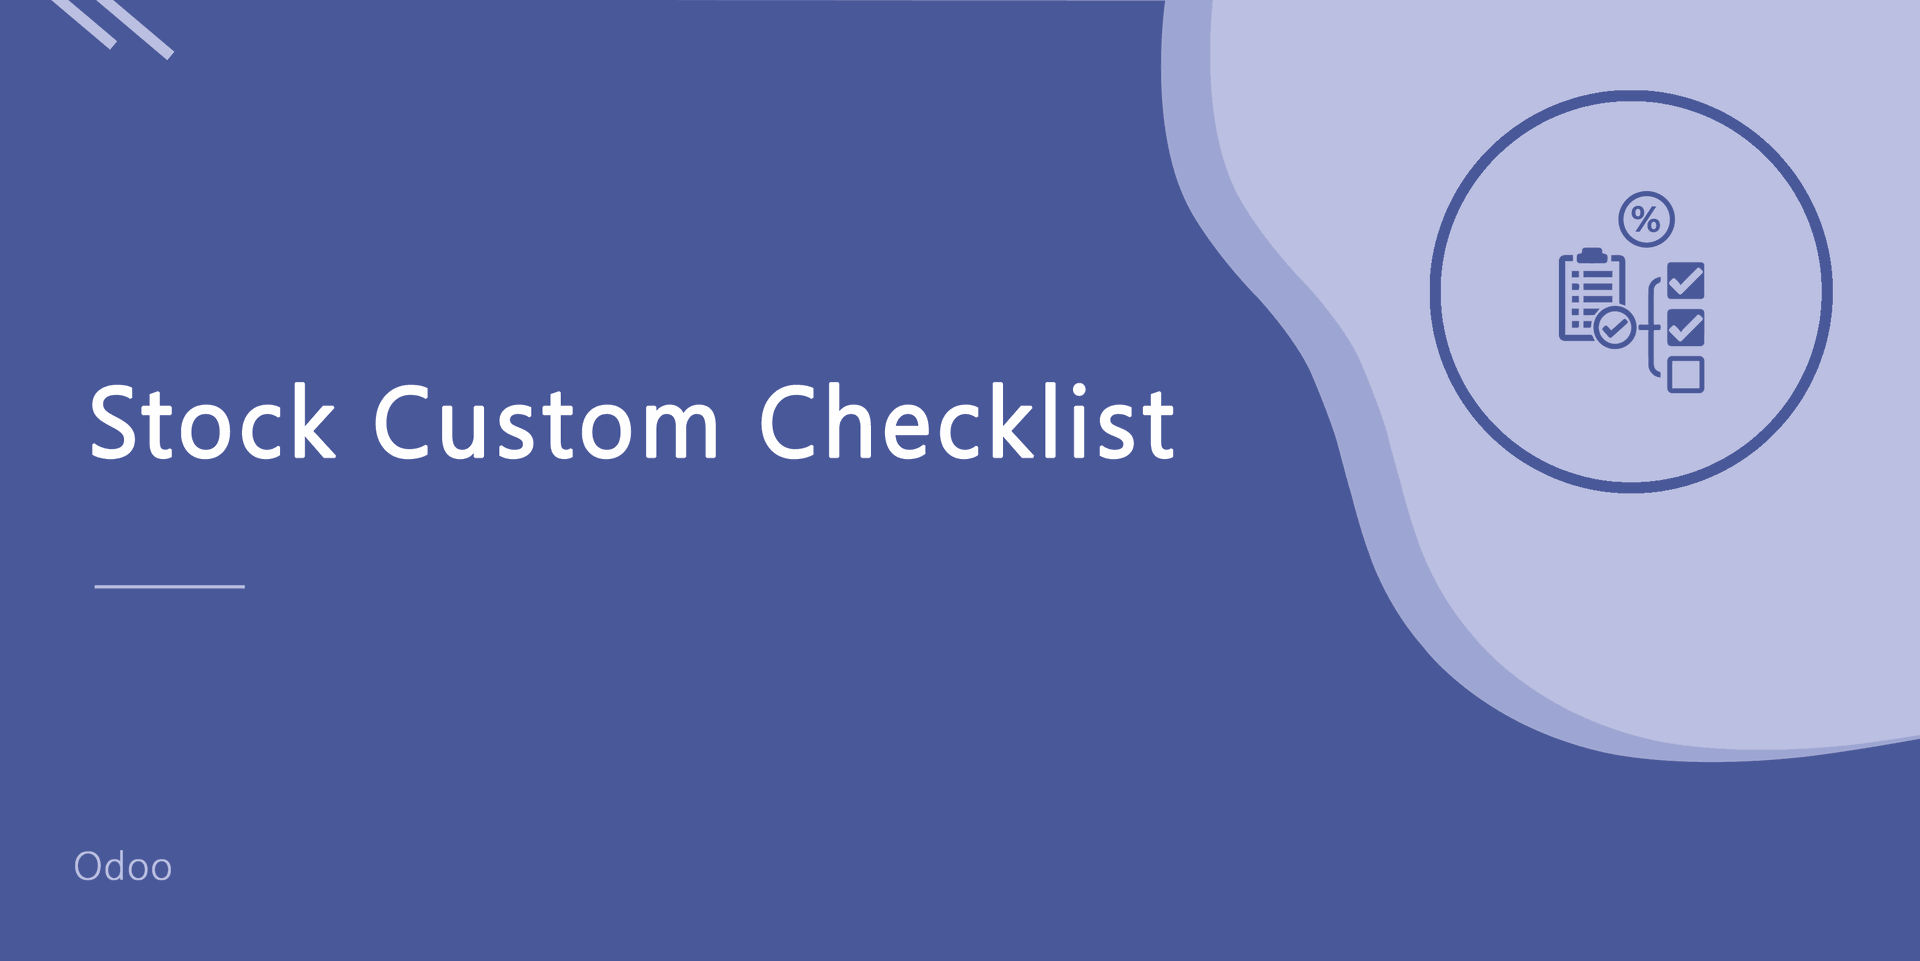 Stock Custom Checklist
